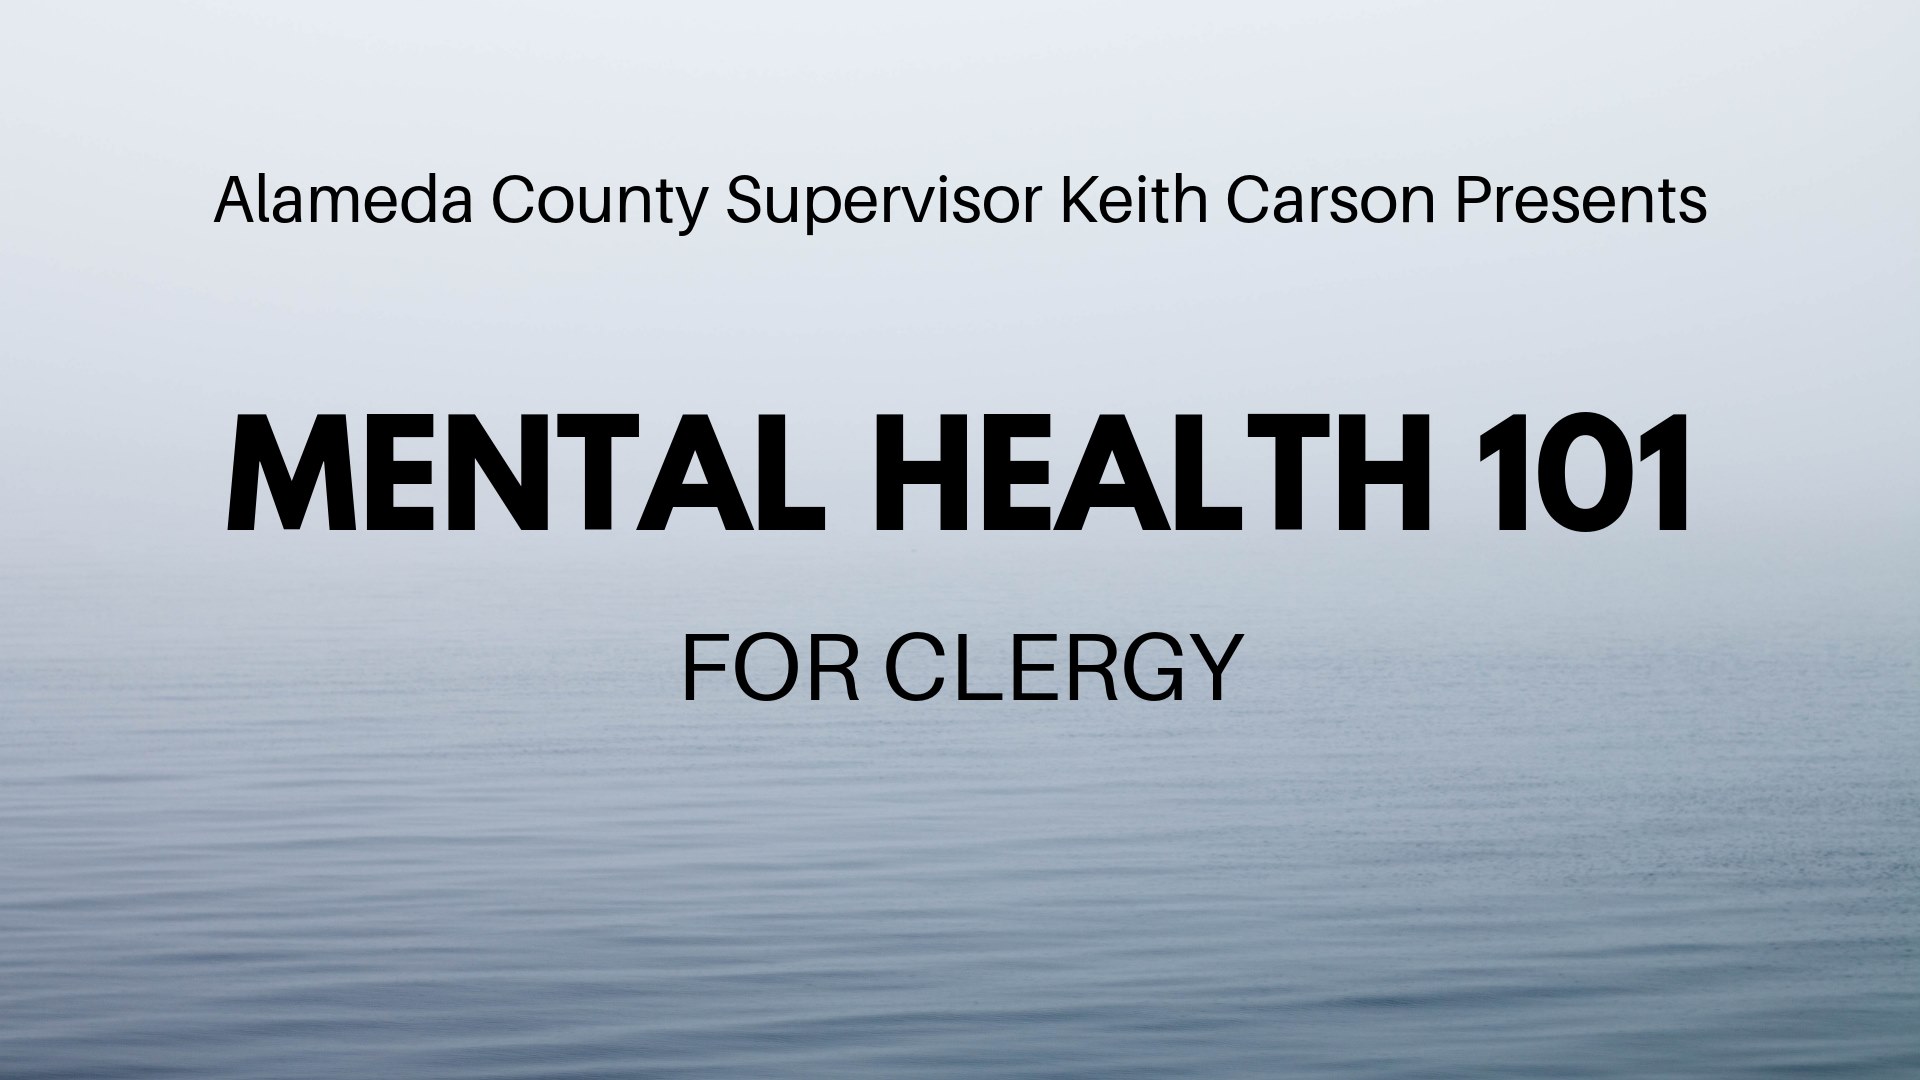 Mental Health 101 For Clergy Supervisor Keith Carson